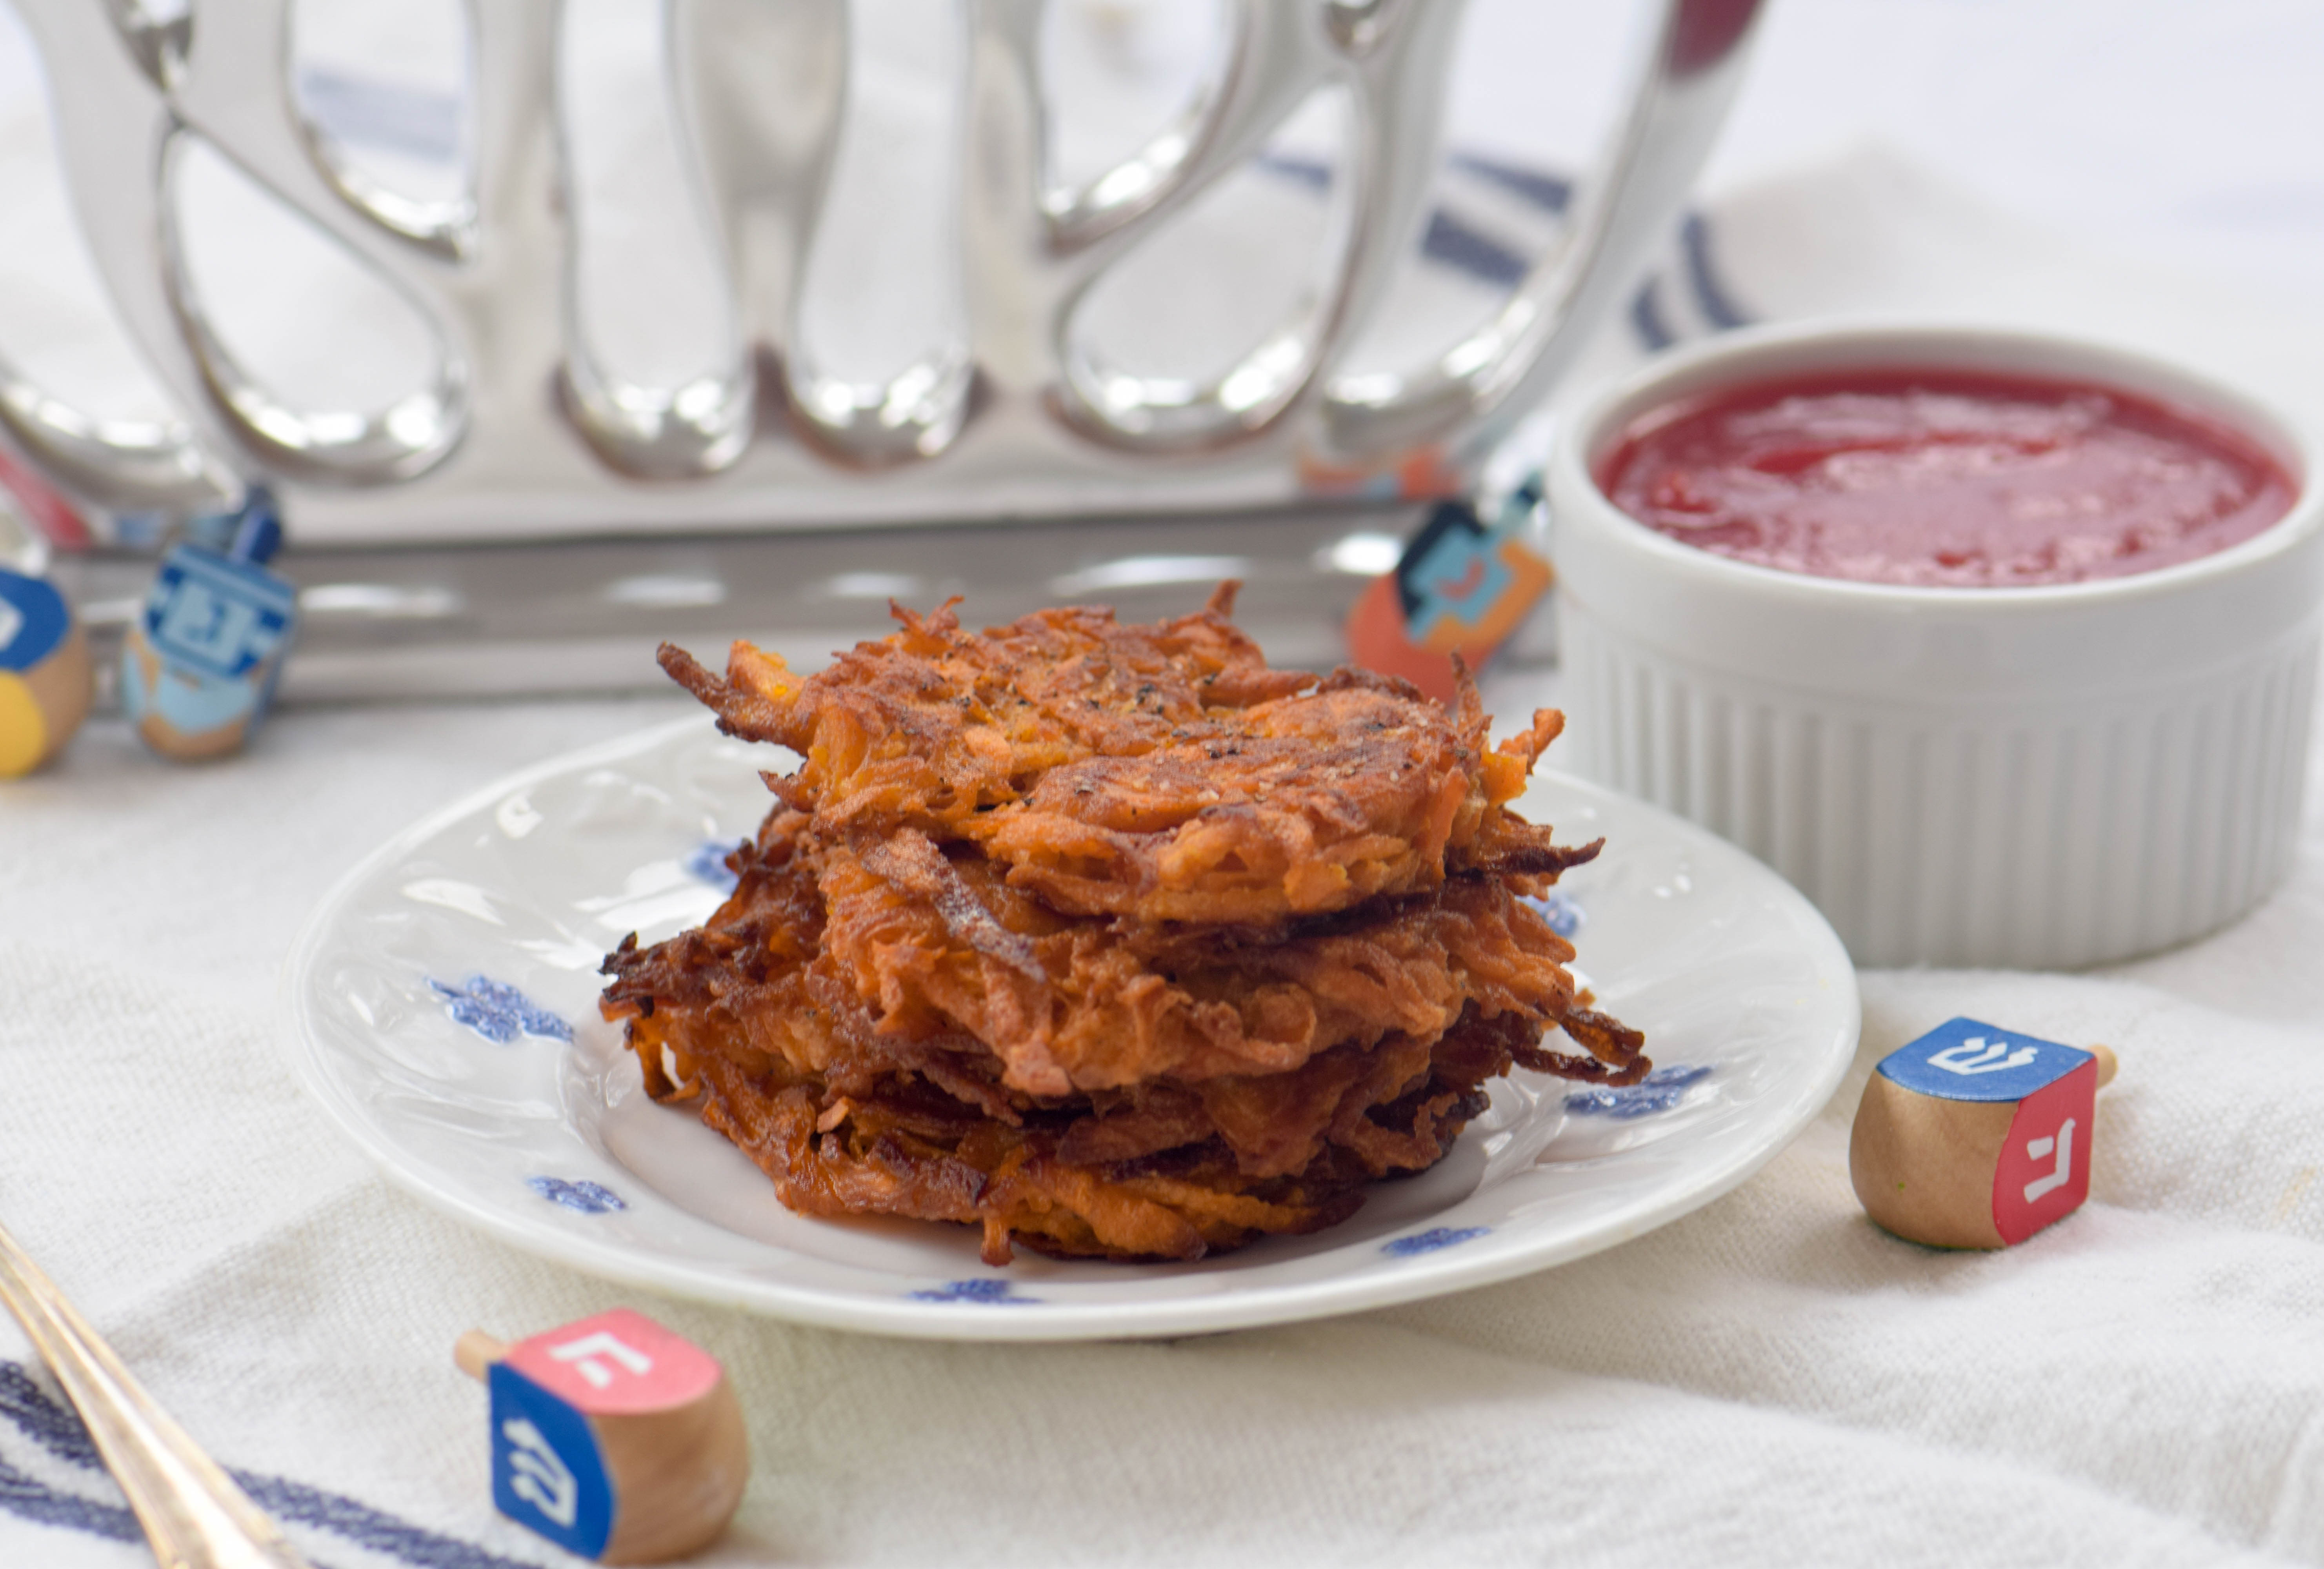 An American Hanukkah Meal: Sweet Potato Latkes and Cranberry Applesauce